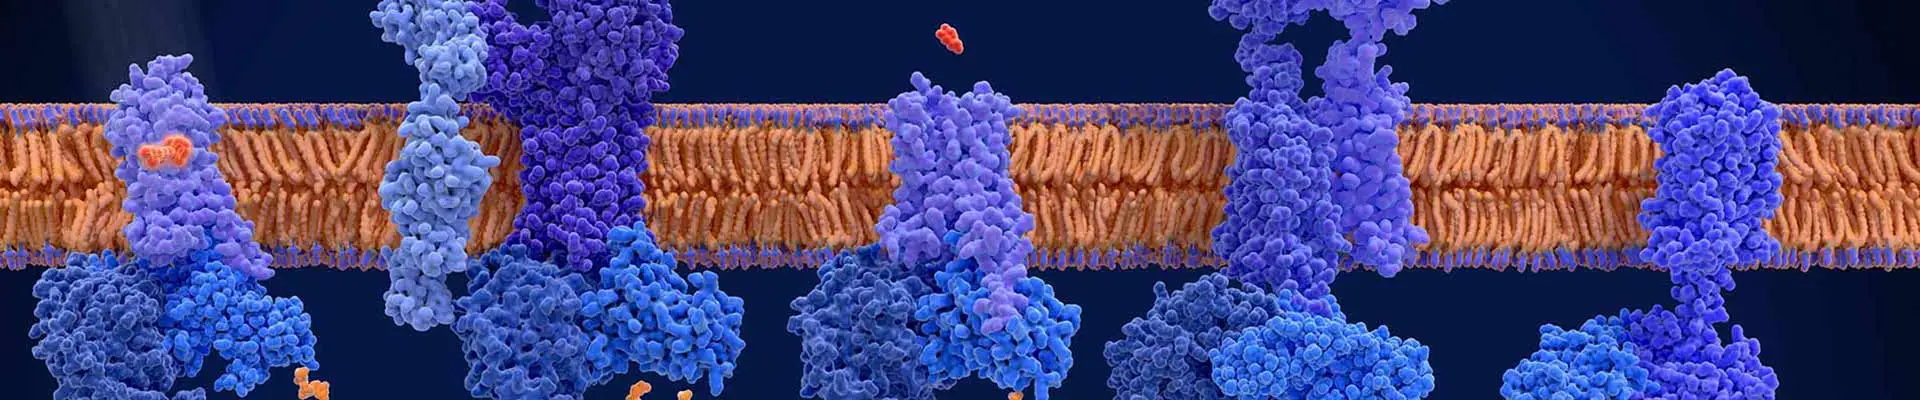 taglite-adenosine-receptor-1920x400.jpg